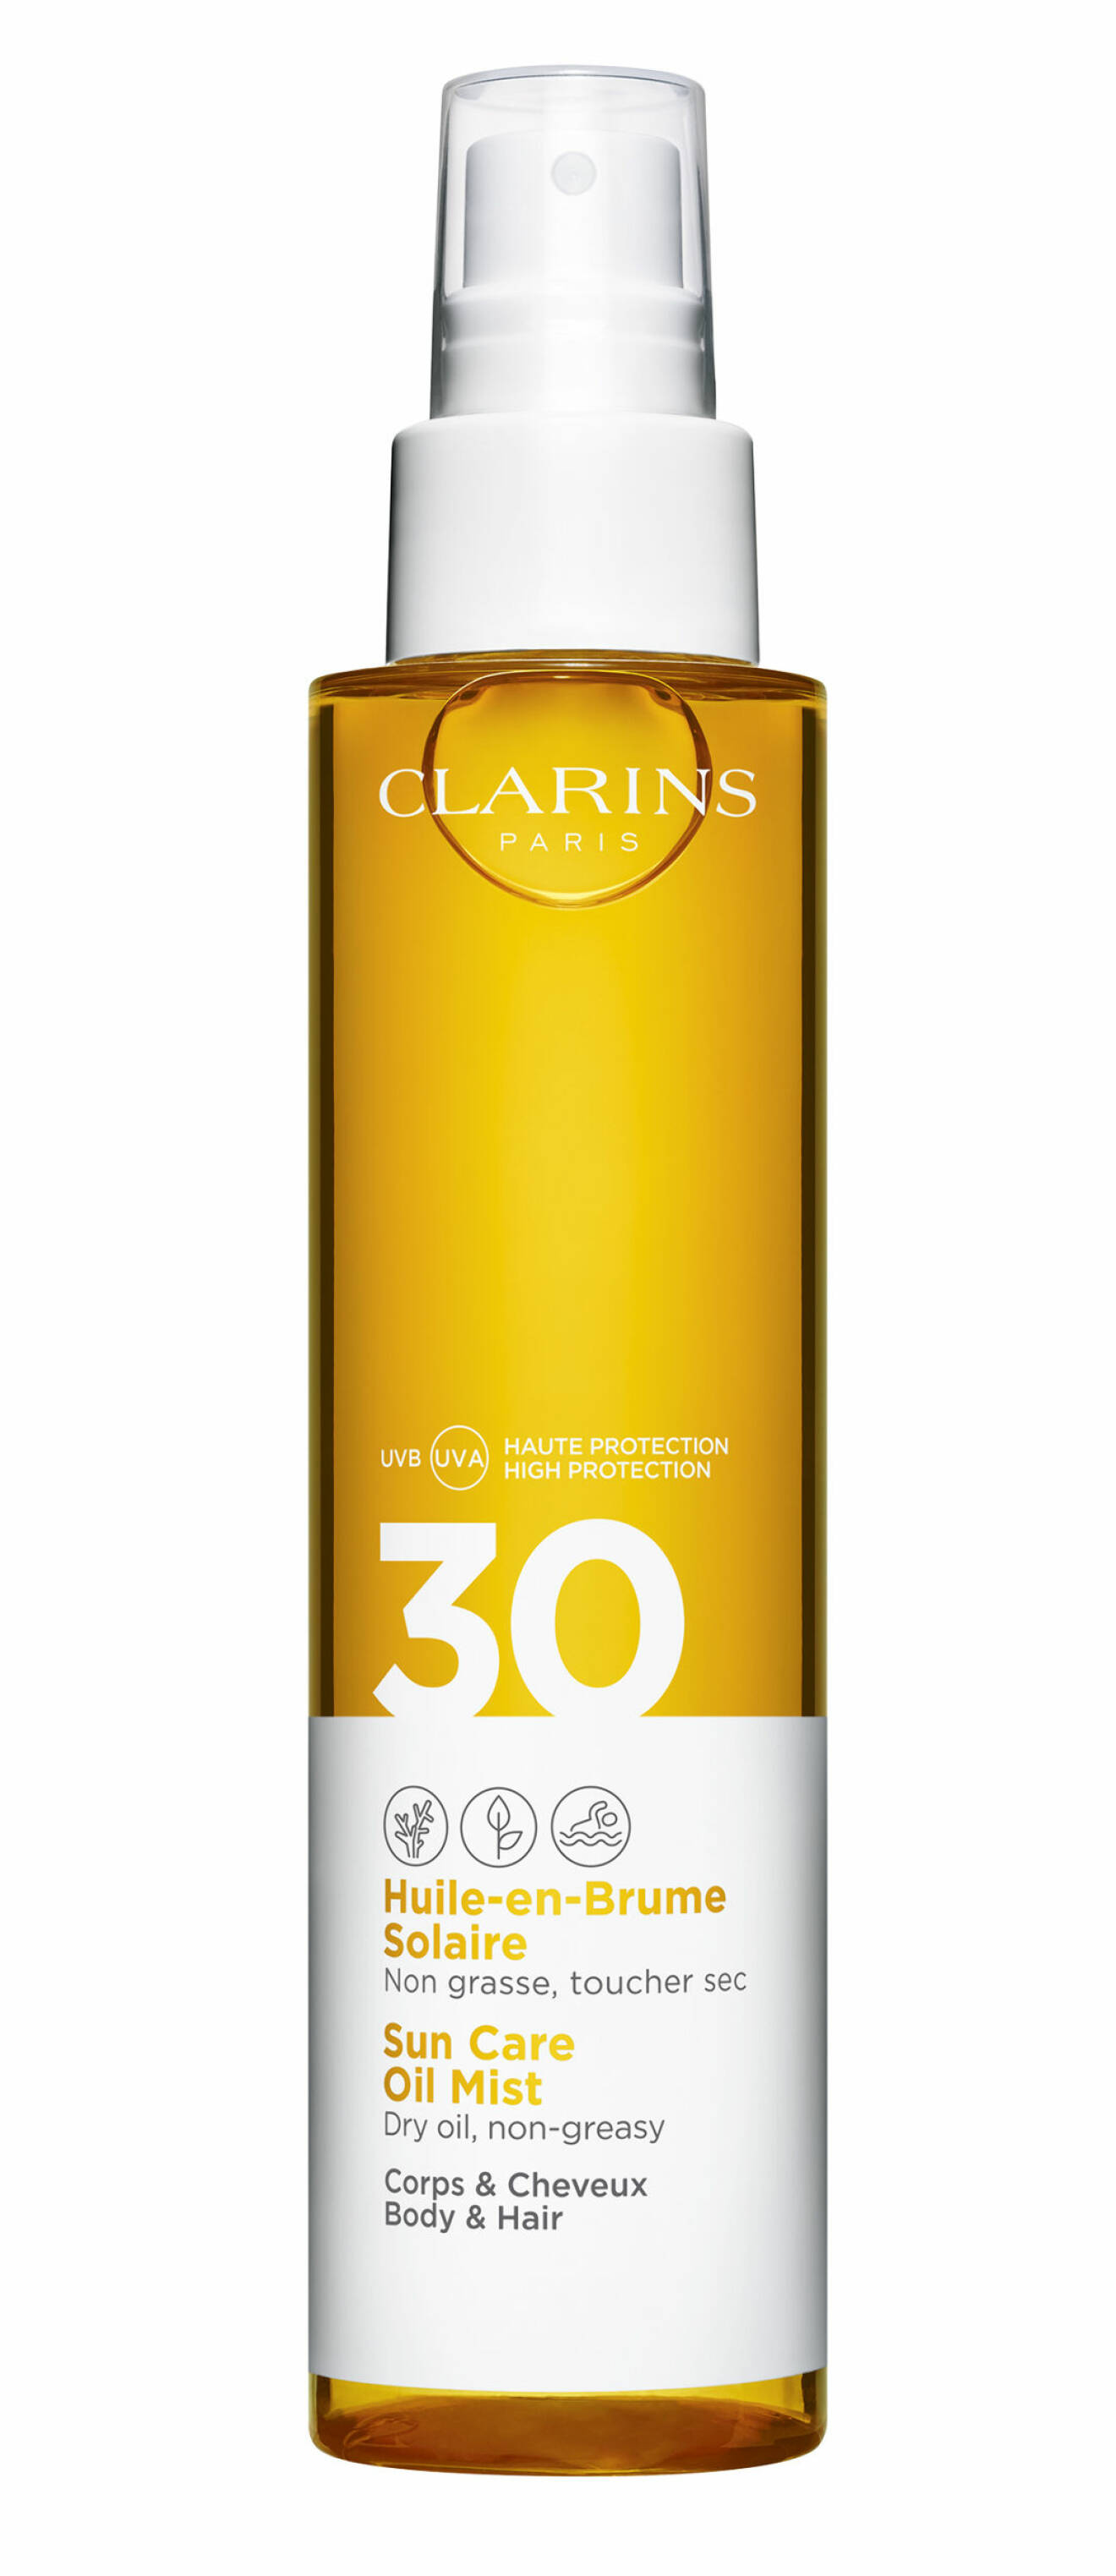 Clarins sun care oil mist spf 30. 